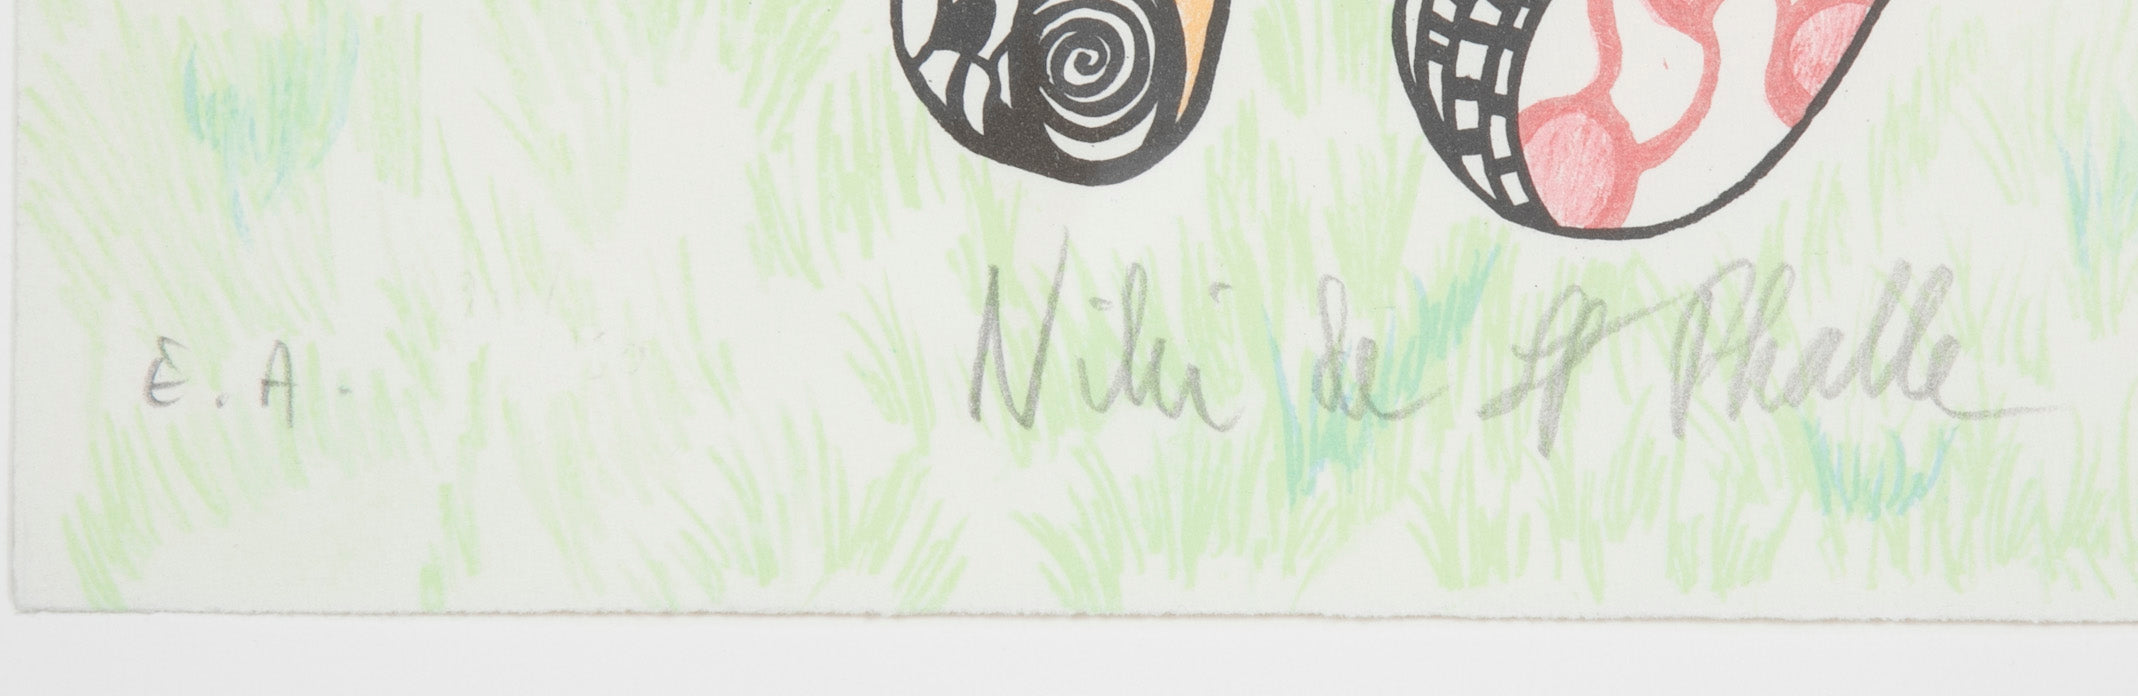 Niki de Saint Phalle Signed Lithograph